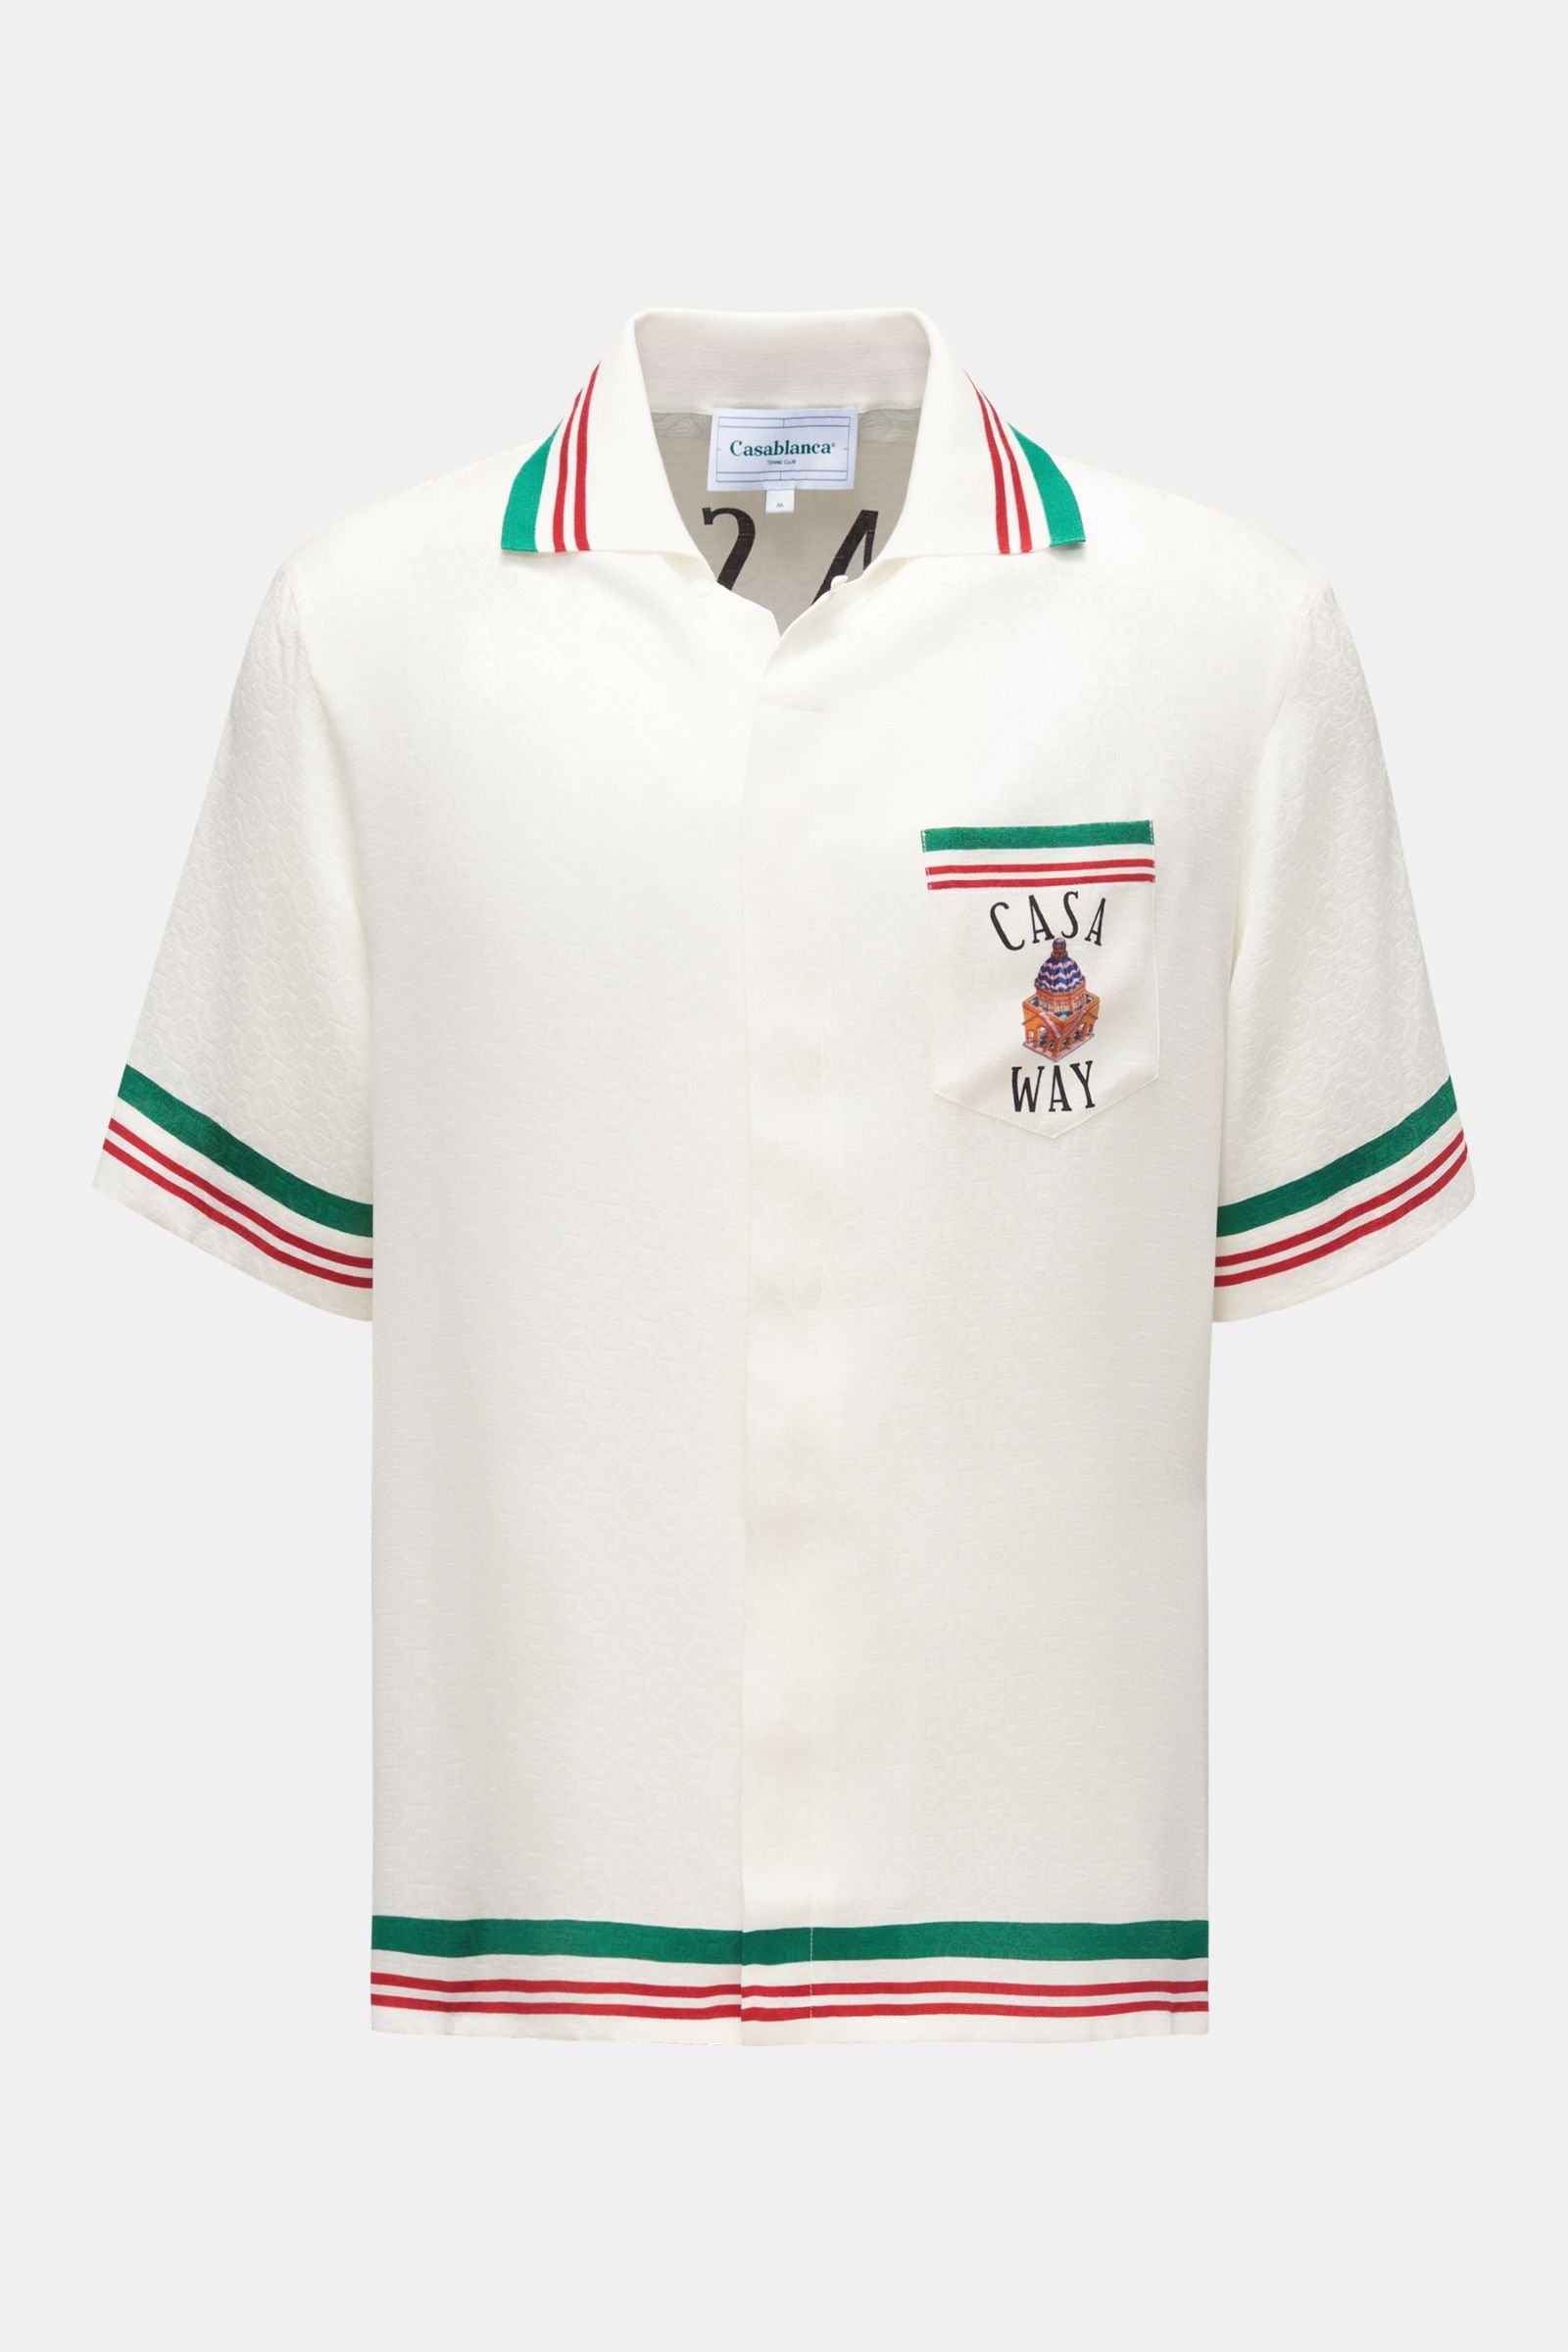 Silk short sleeve shirt 'Casa Way' polo shirt collar white patterned